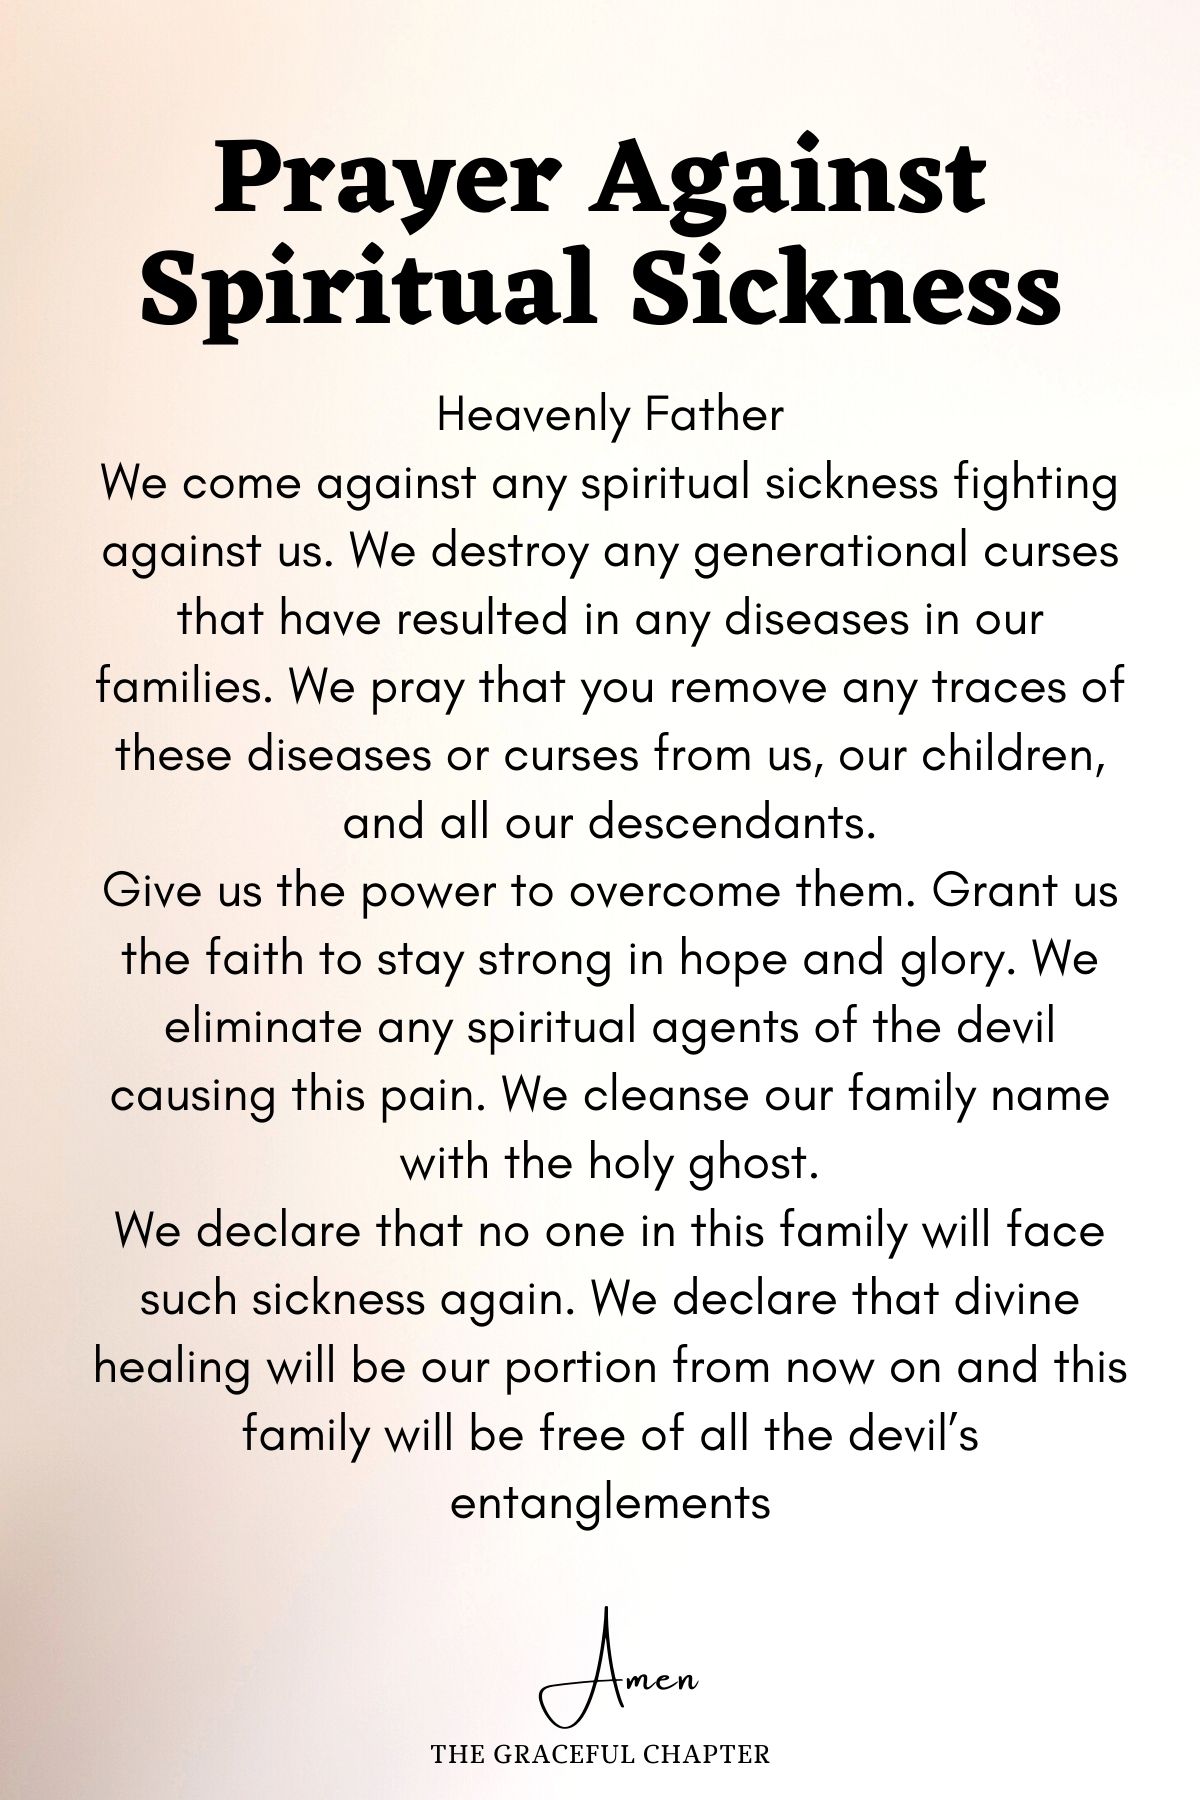 Prayer against spiritual sickness